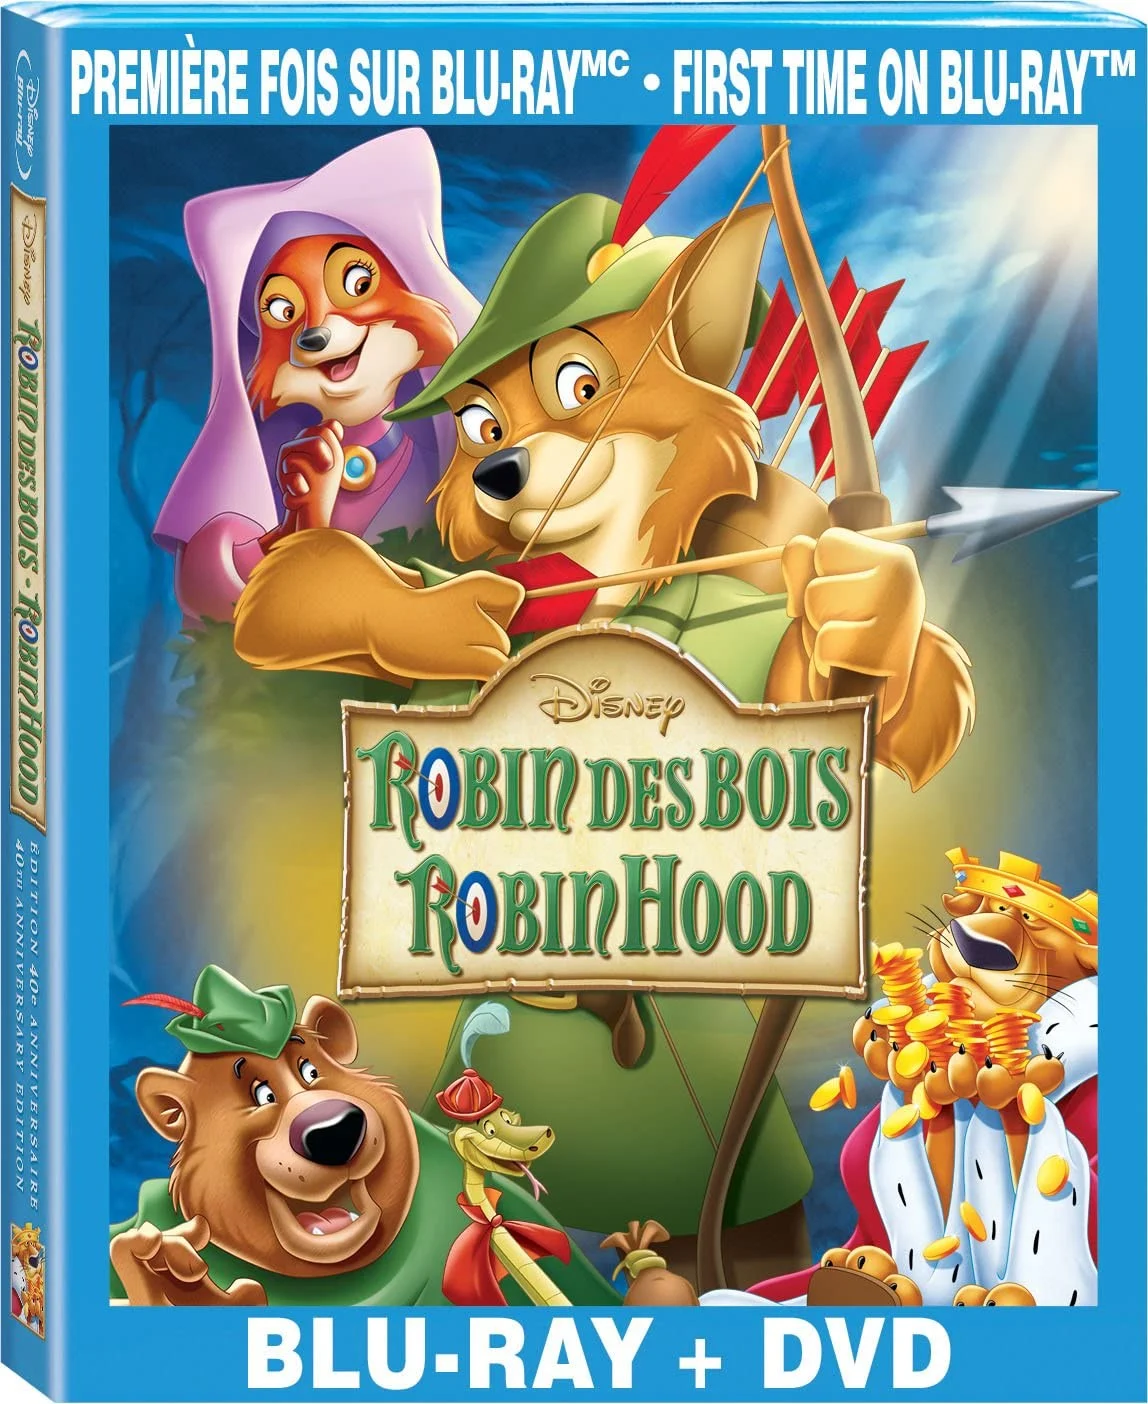 Robin Hood: 40th Ann. Ed. (Blu-ray) on MovieShack